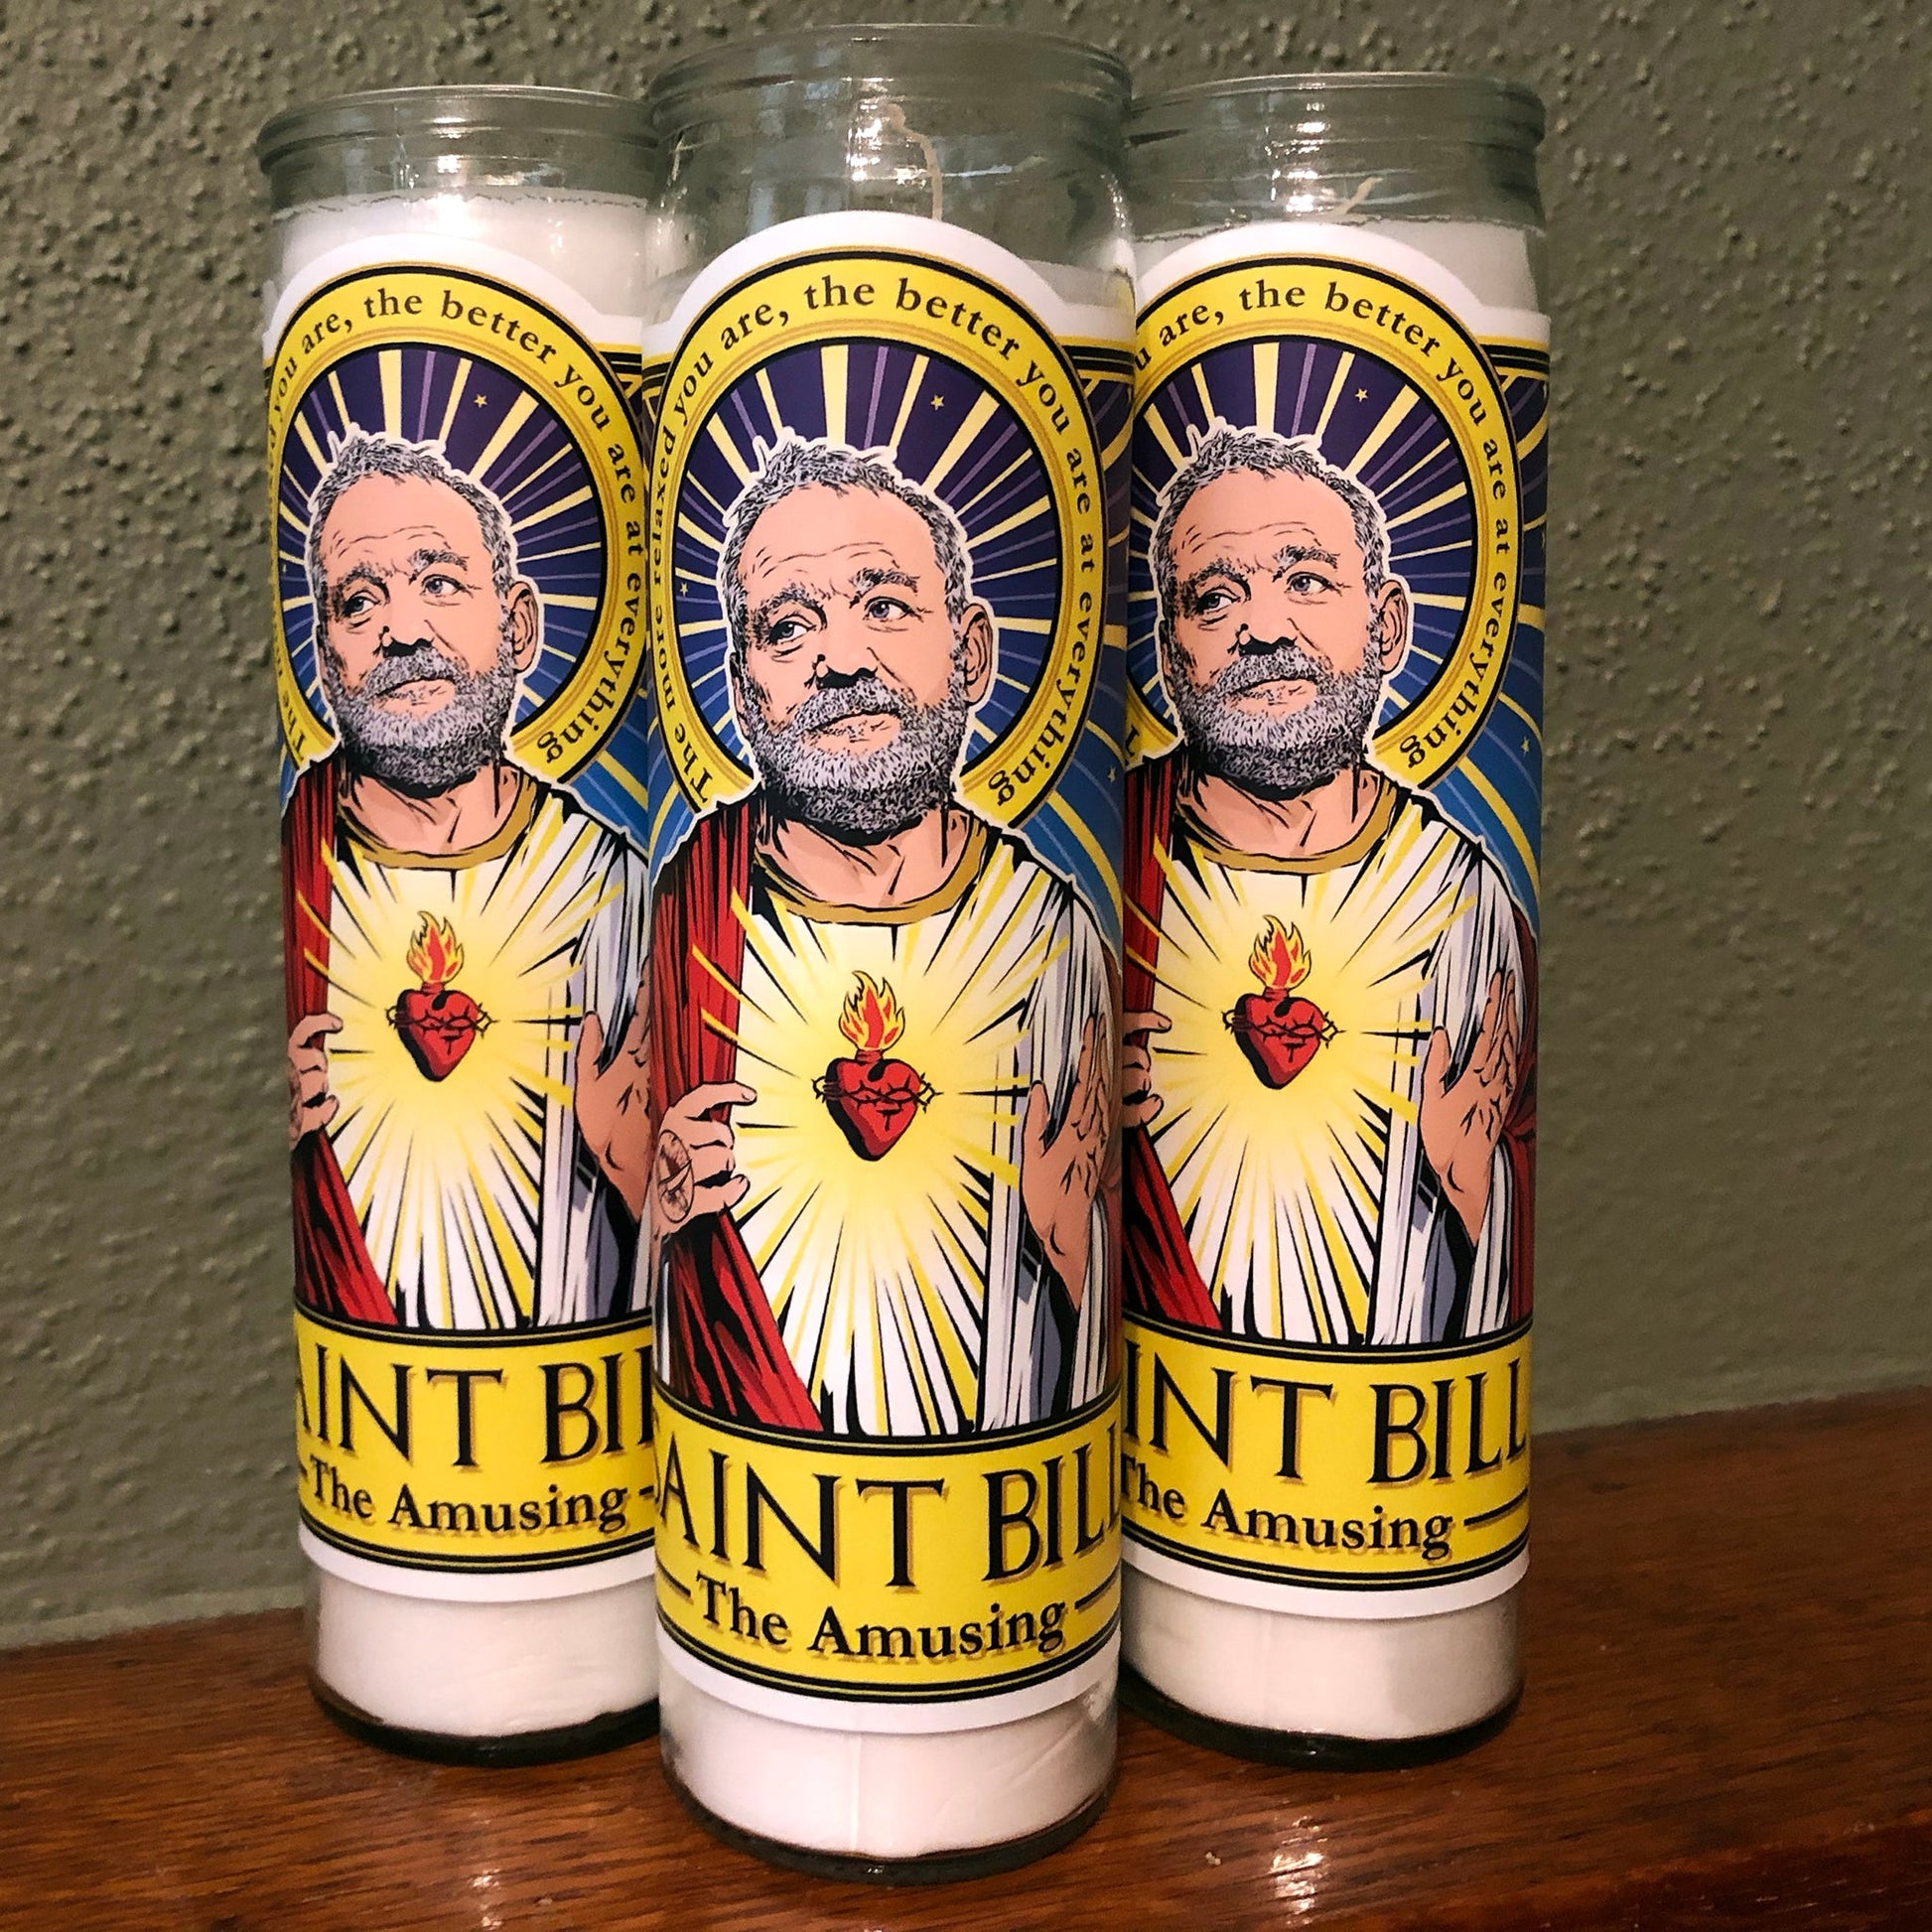 Saint Bill-The Amusing Candle Cleaverandblade.com